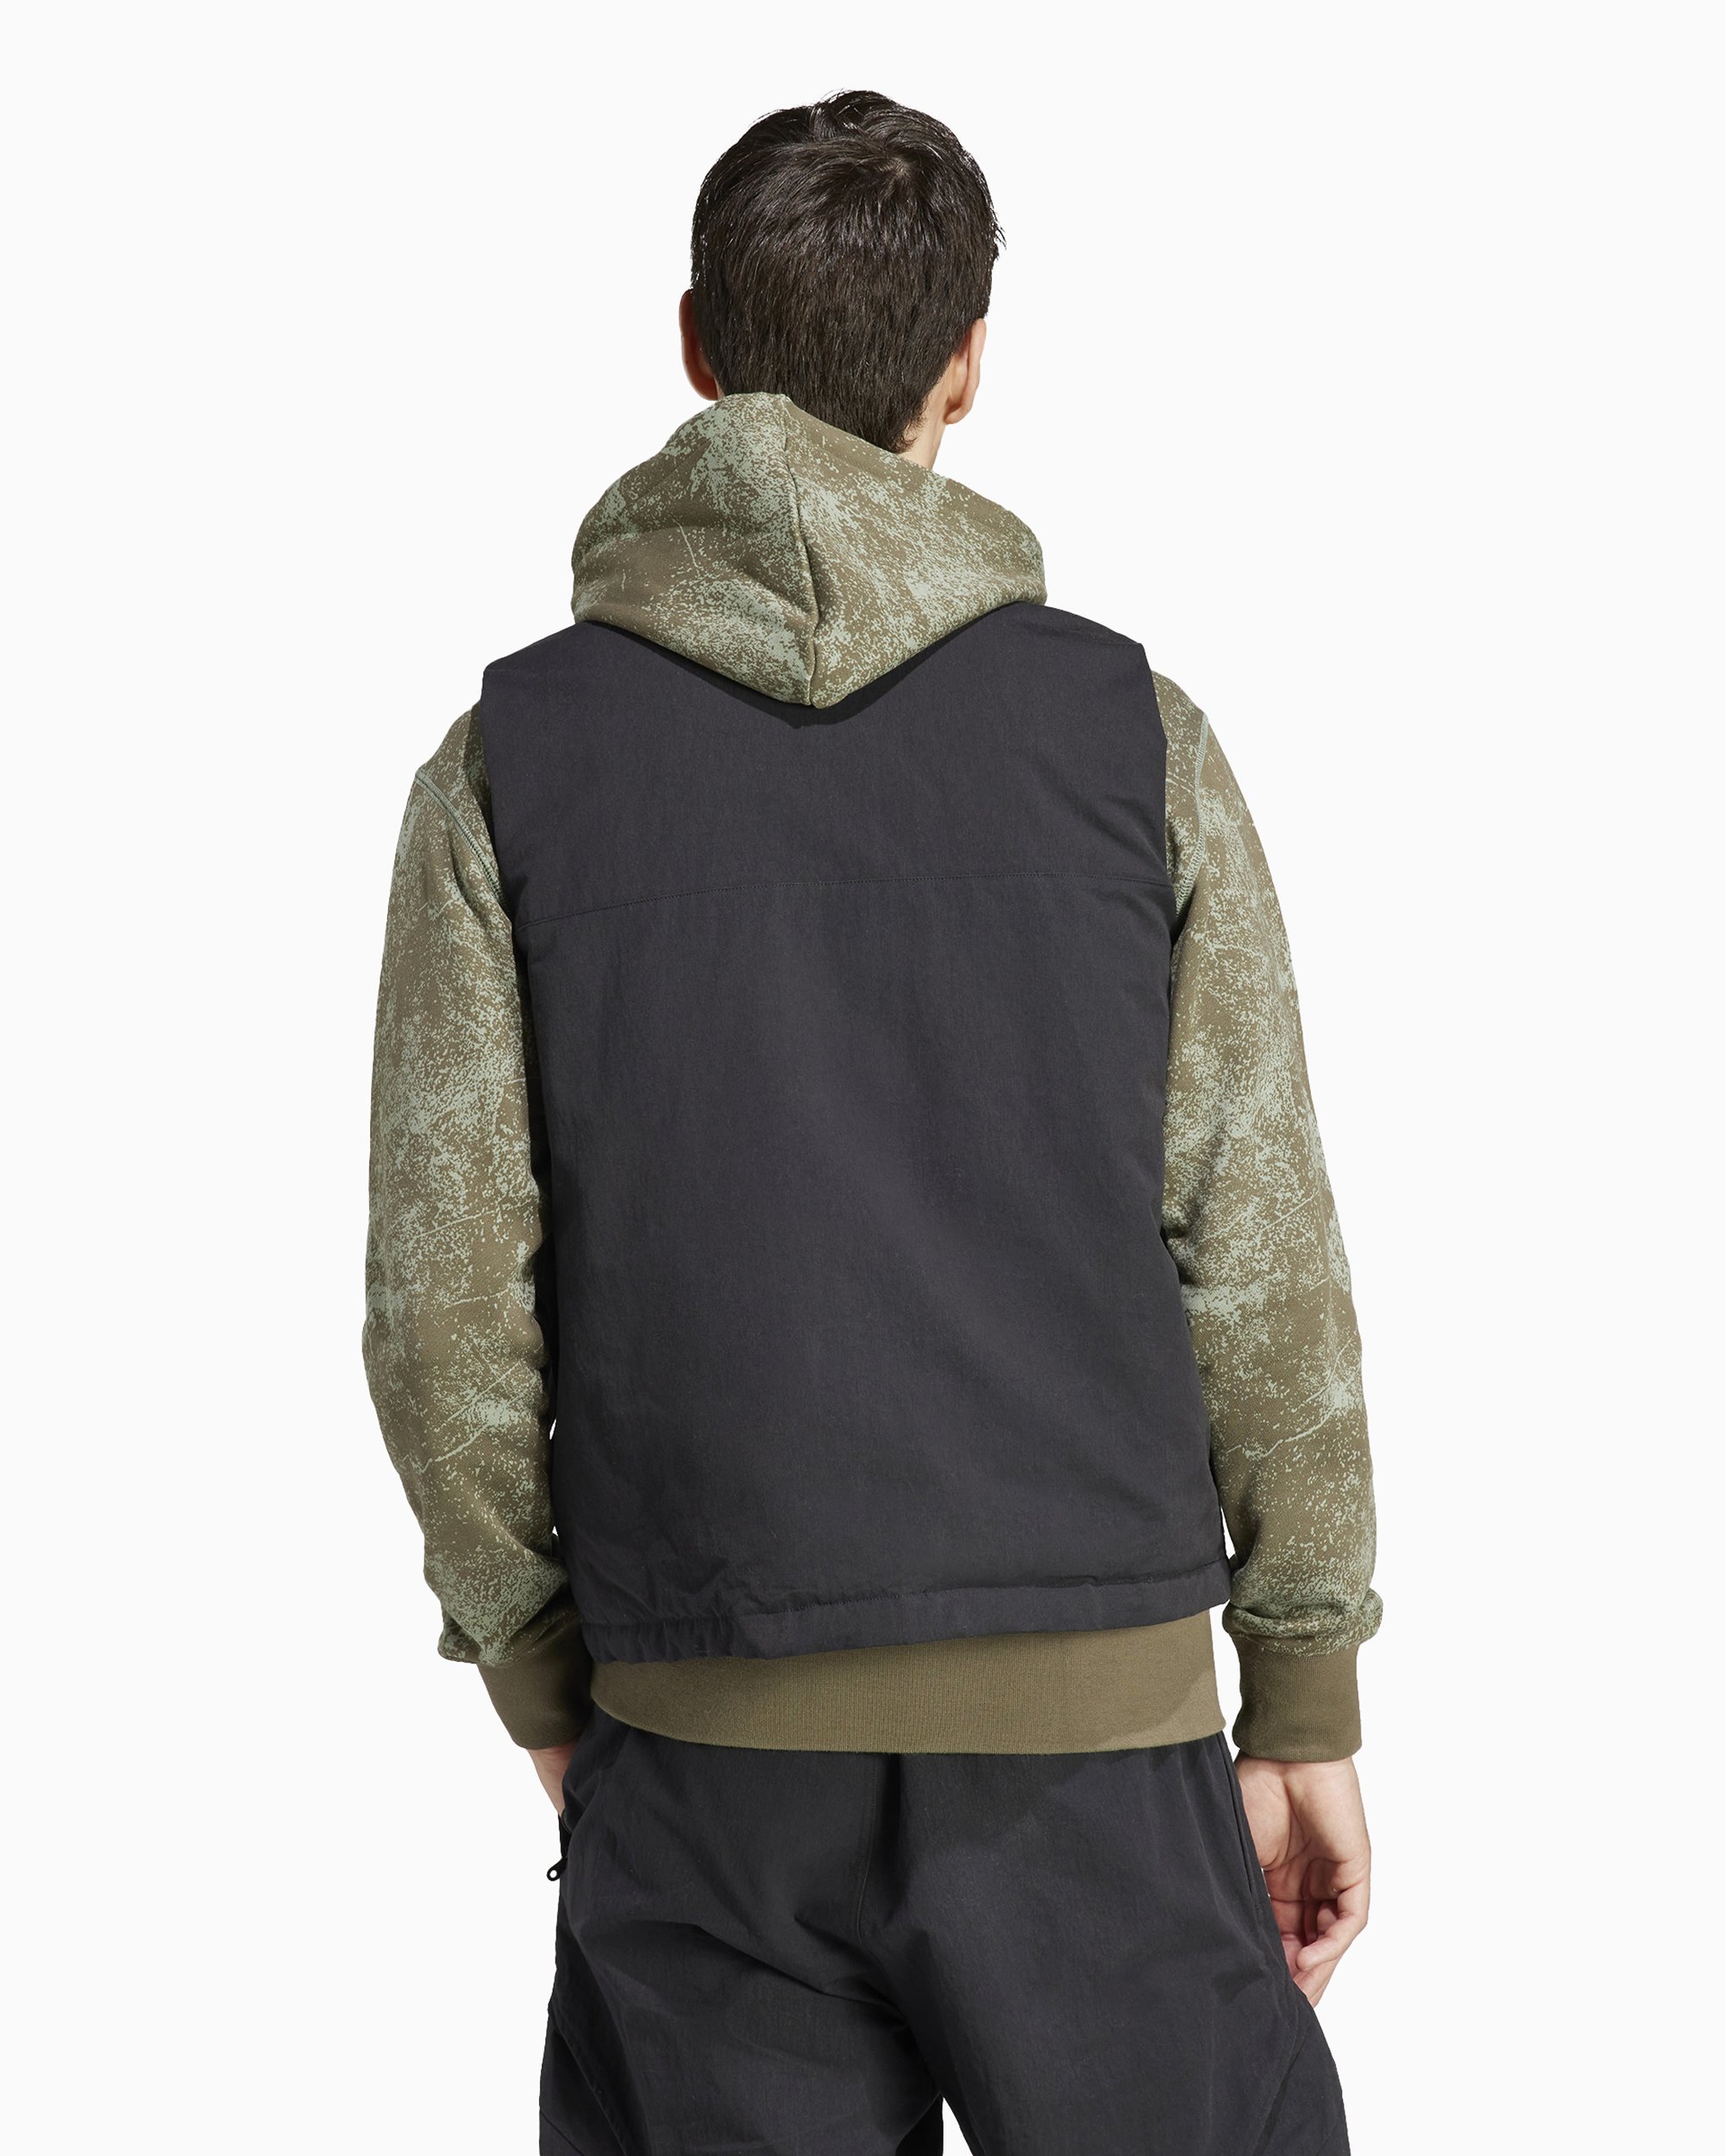 Vest adidas Buy FOOTDISTRICT at IJ0721| Men\'s Premium Originals Online Multi-Pocket Adventure Black